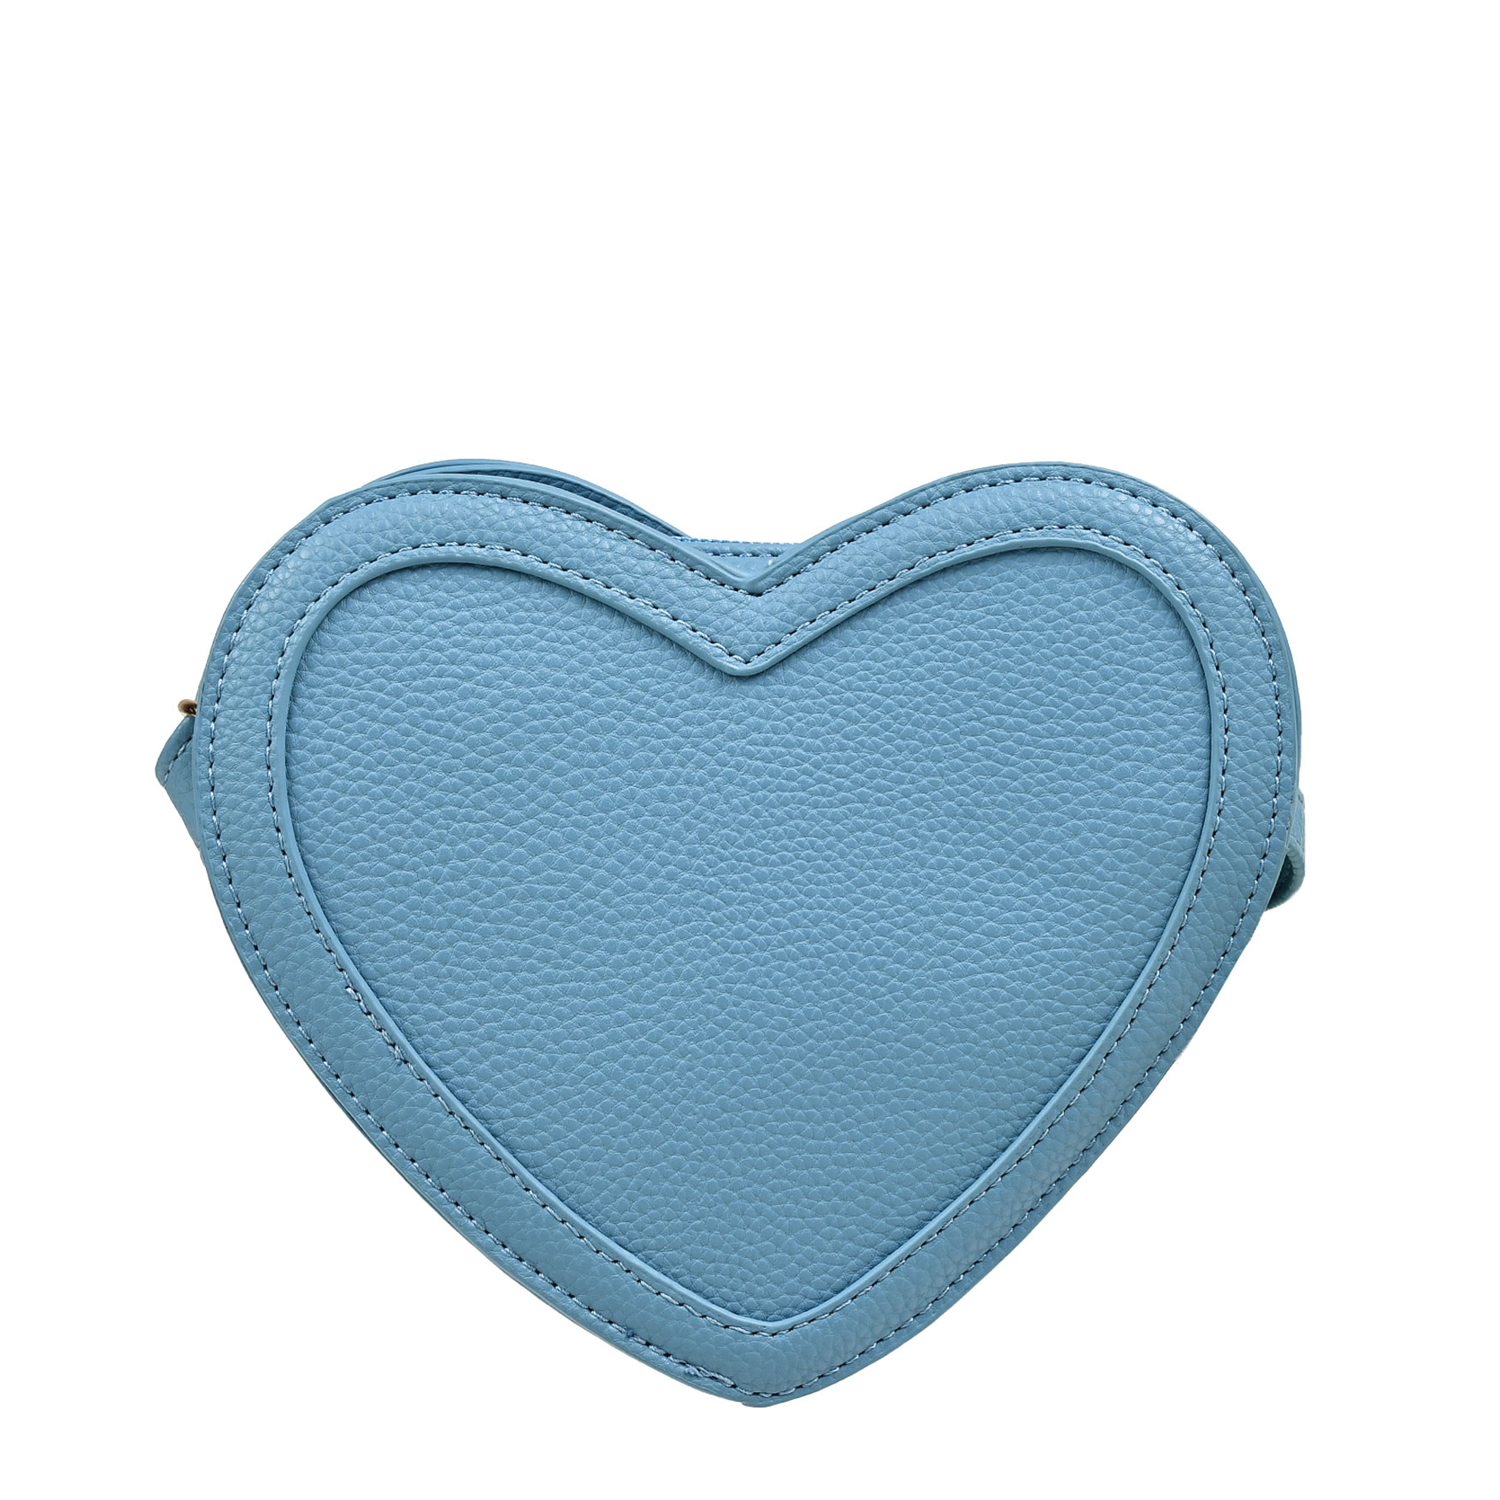 Сумка Heart Bag Forget Me Not Molo, размер unica, цвет голубой